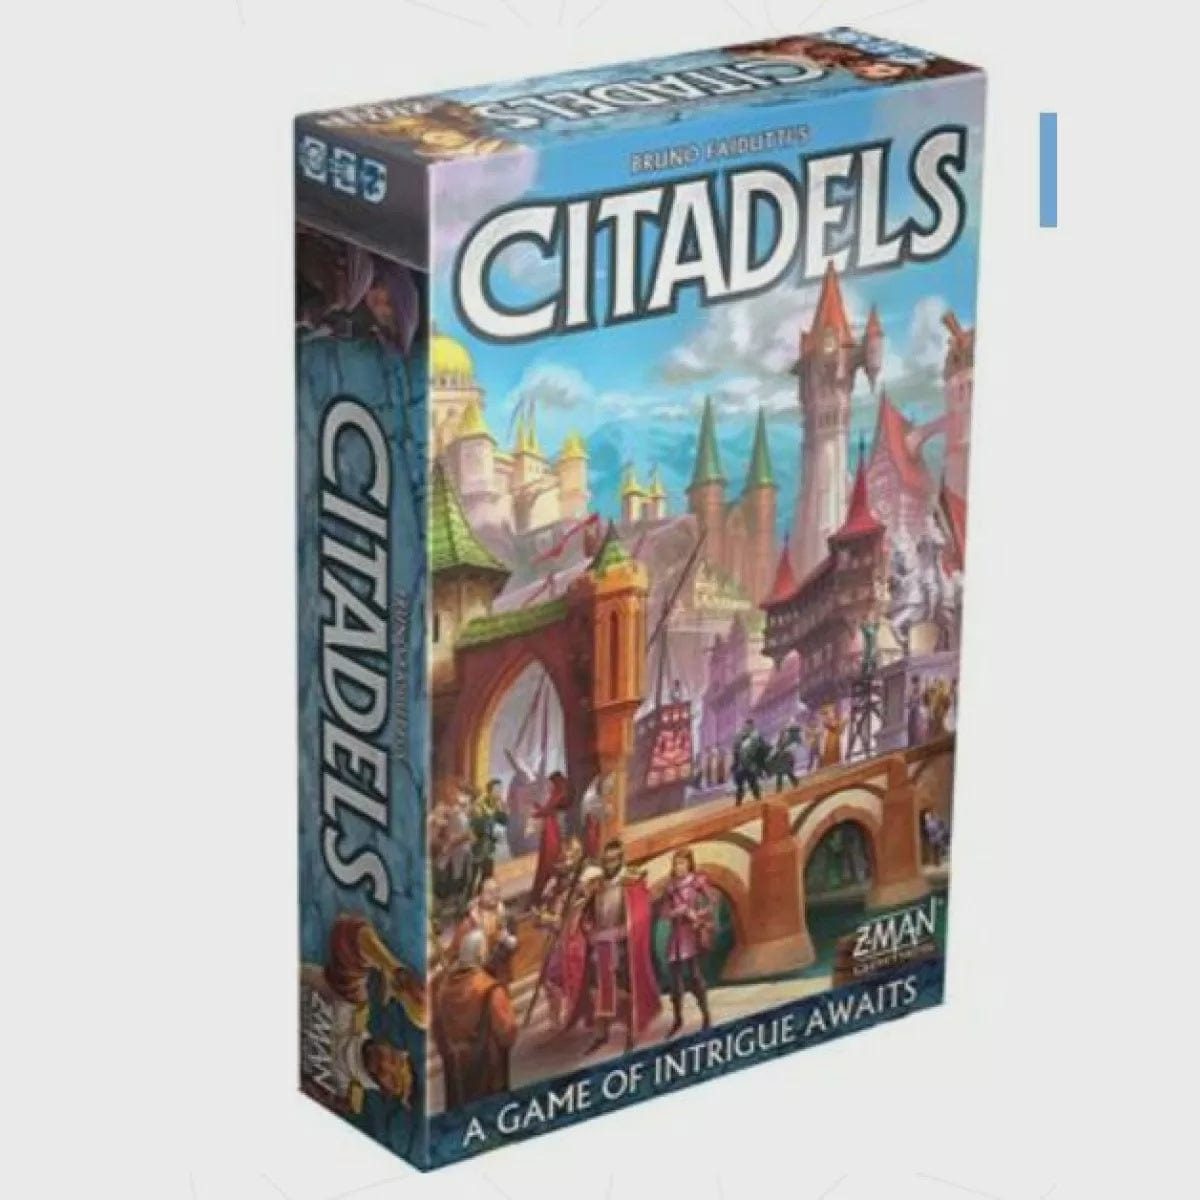 Z-Man Games General Citadels Revised Edition